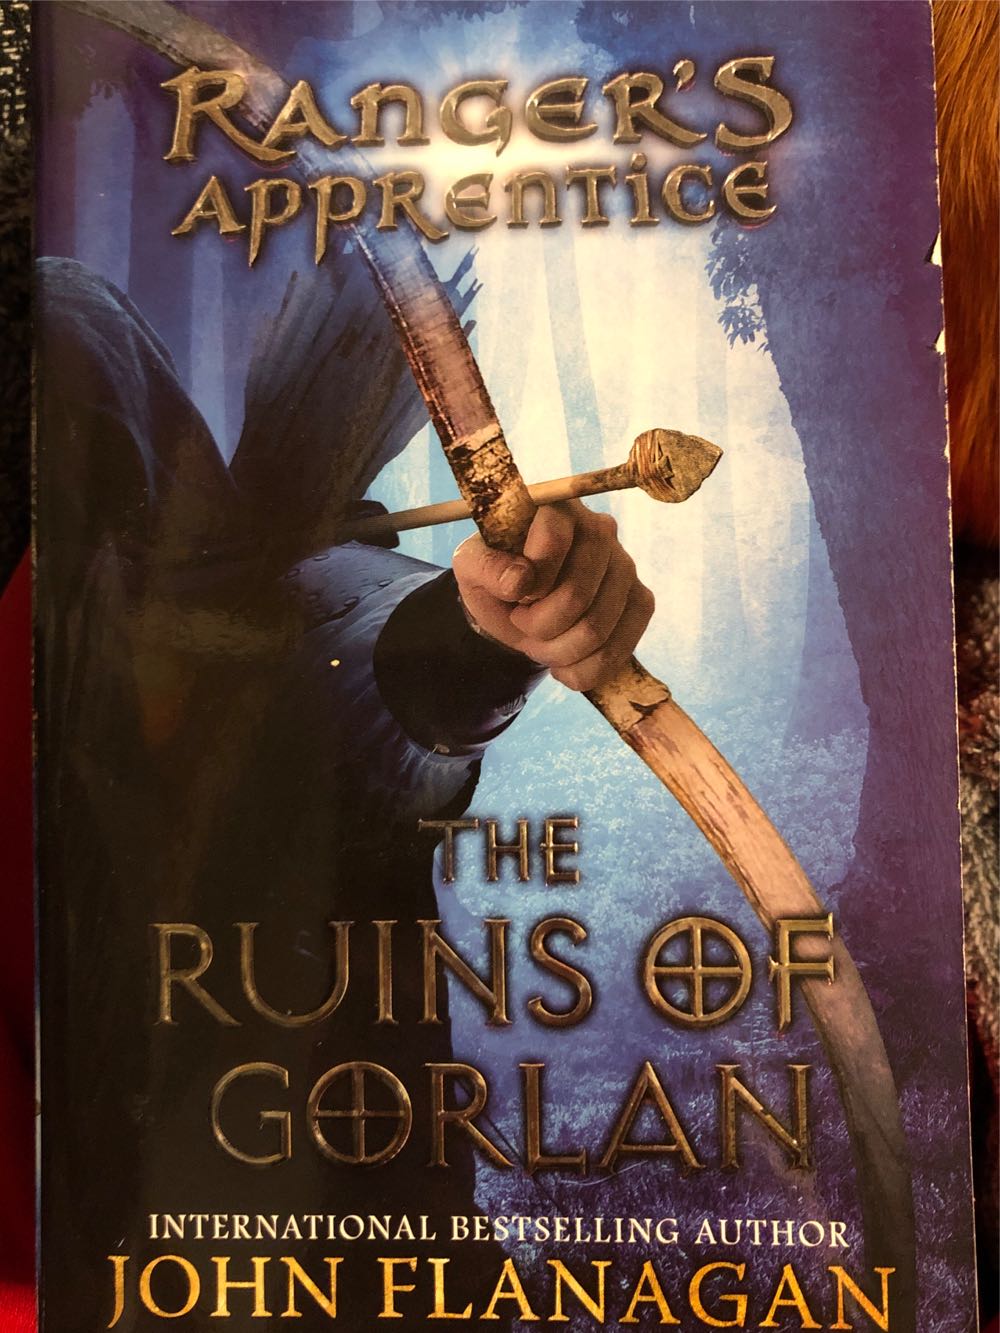 Ranger’s Apprentice 1: The Ruins of Gorlan - John Flanagan (Puffin - Paperback) book collectible [Barcode 9780142406632] - Main Image 3